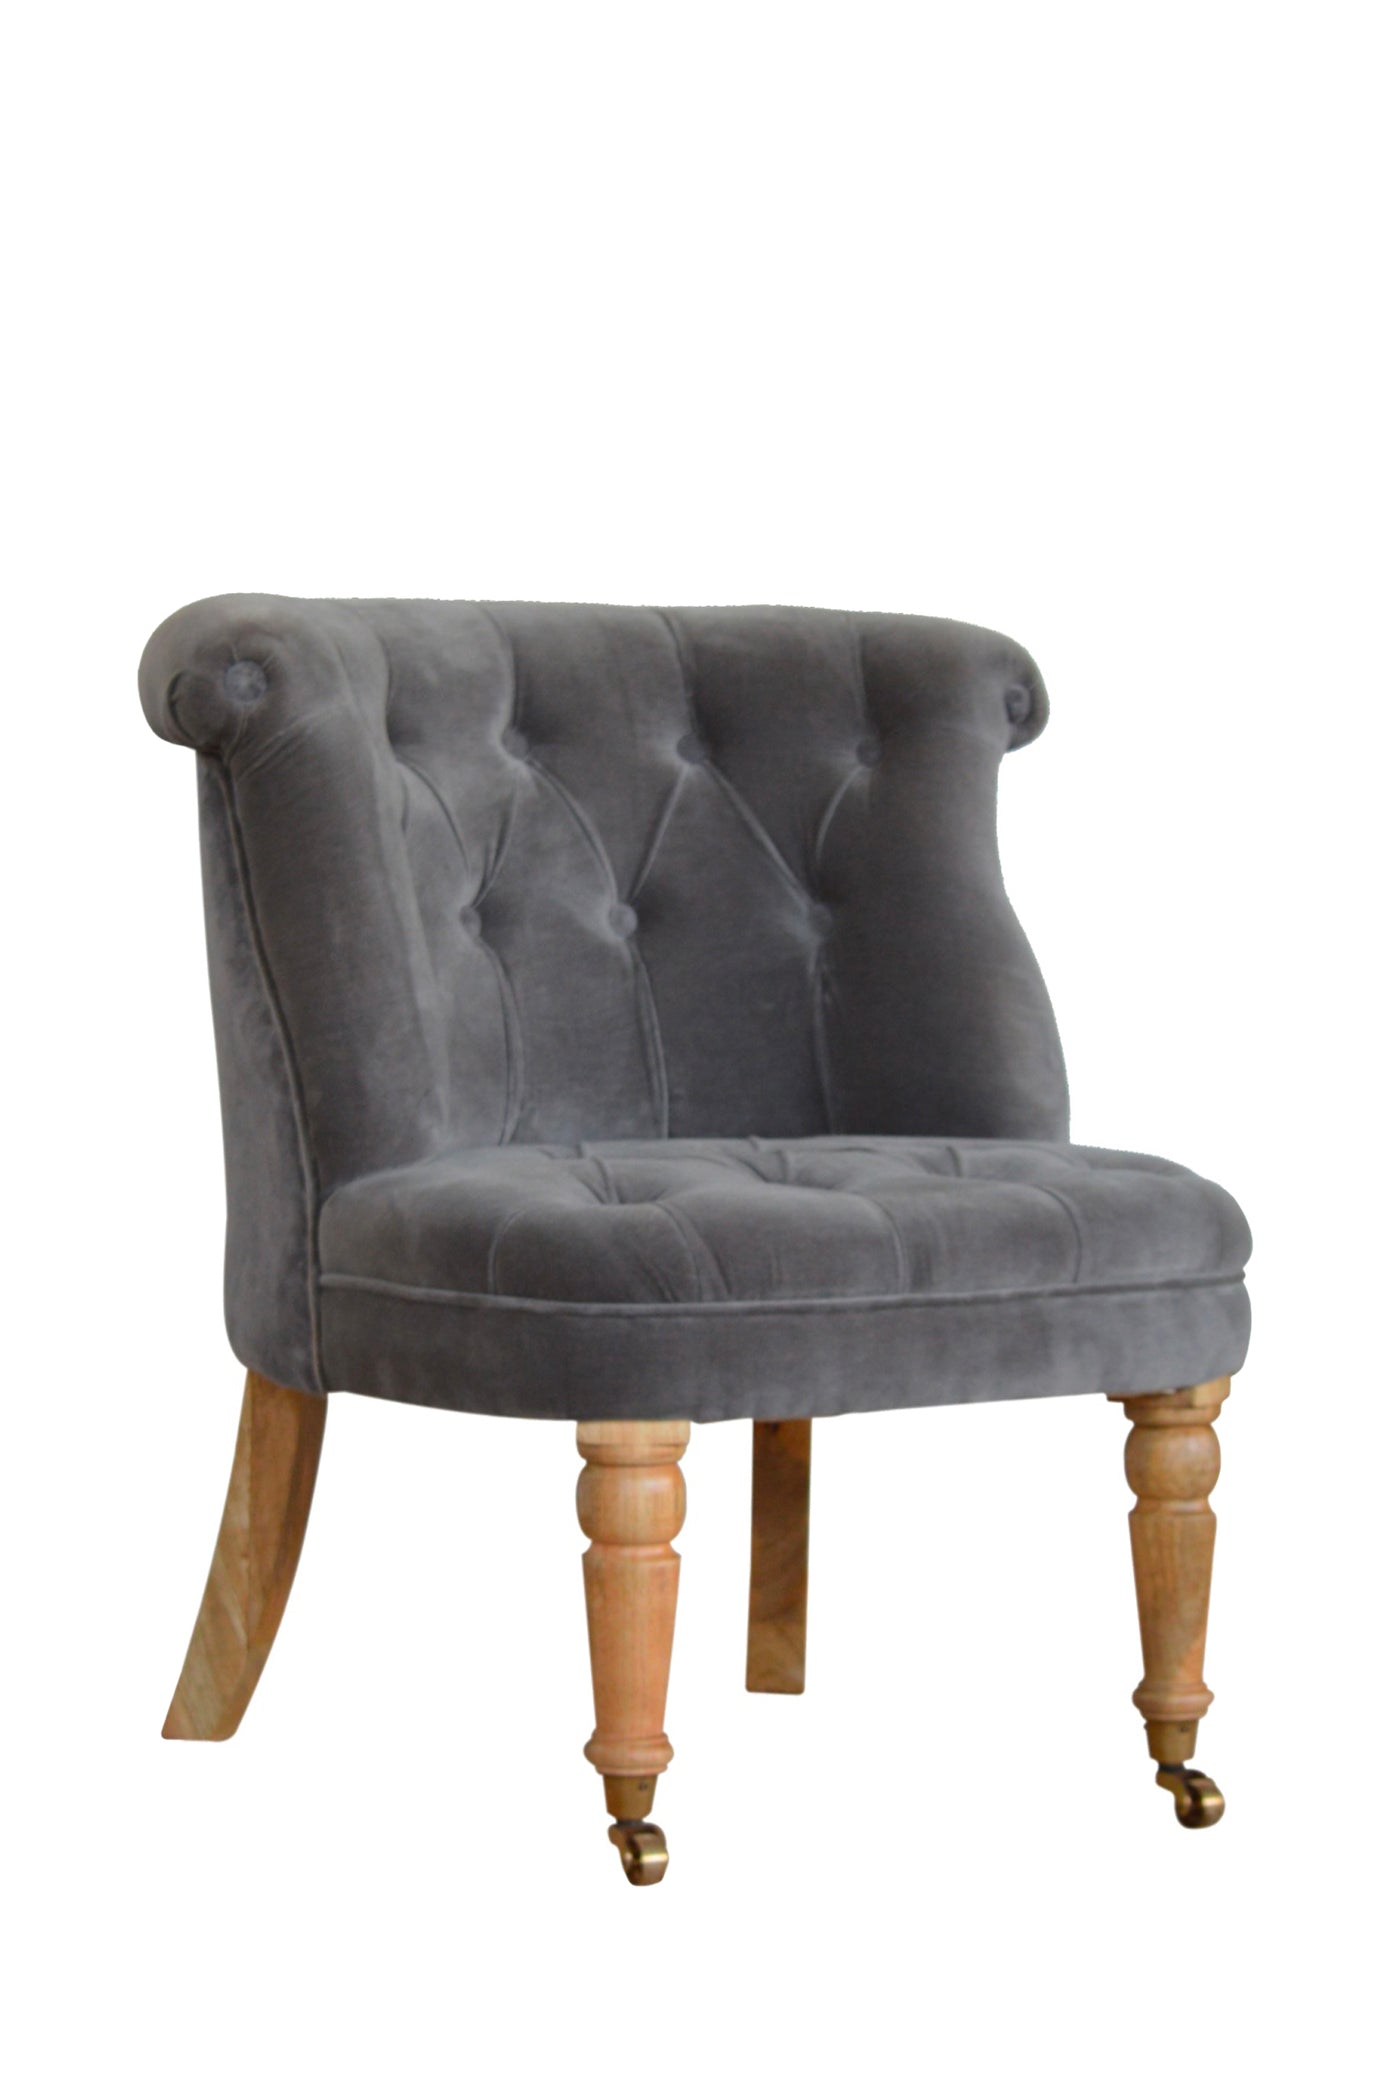 Pimlico - Chair Castors Grey